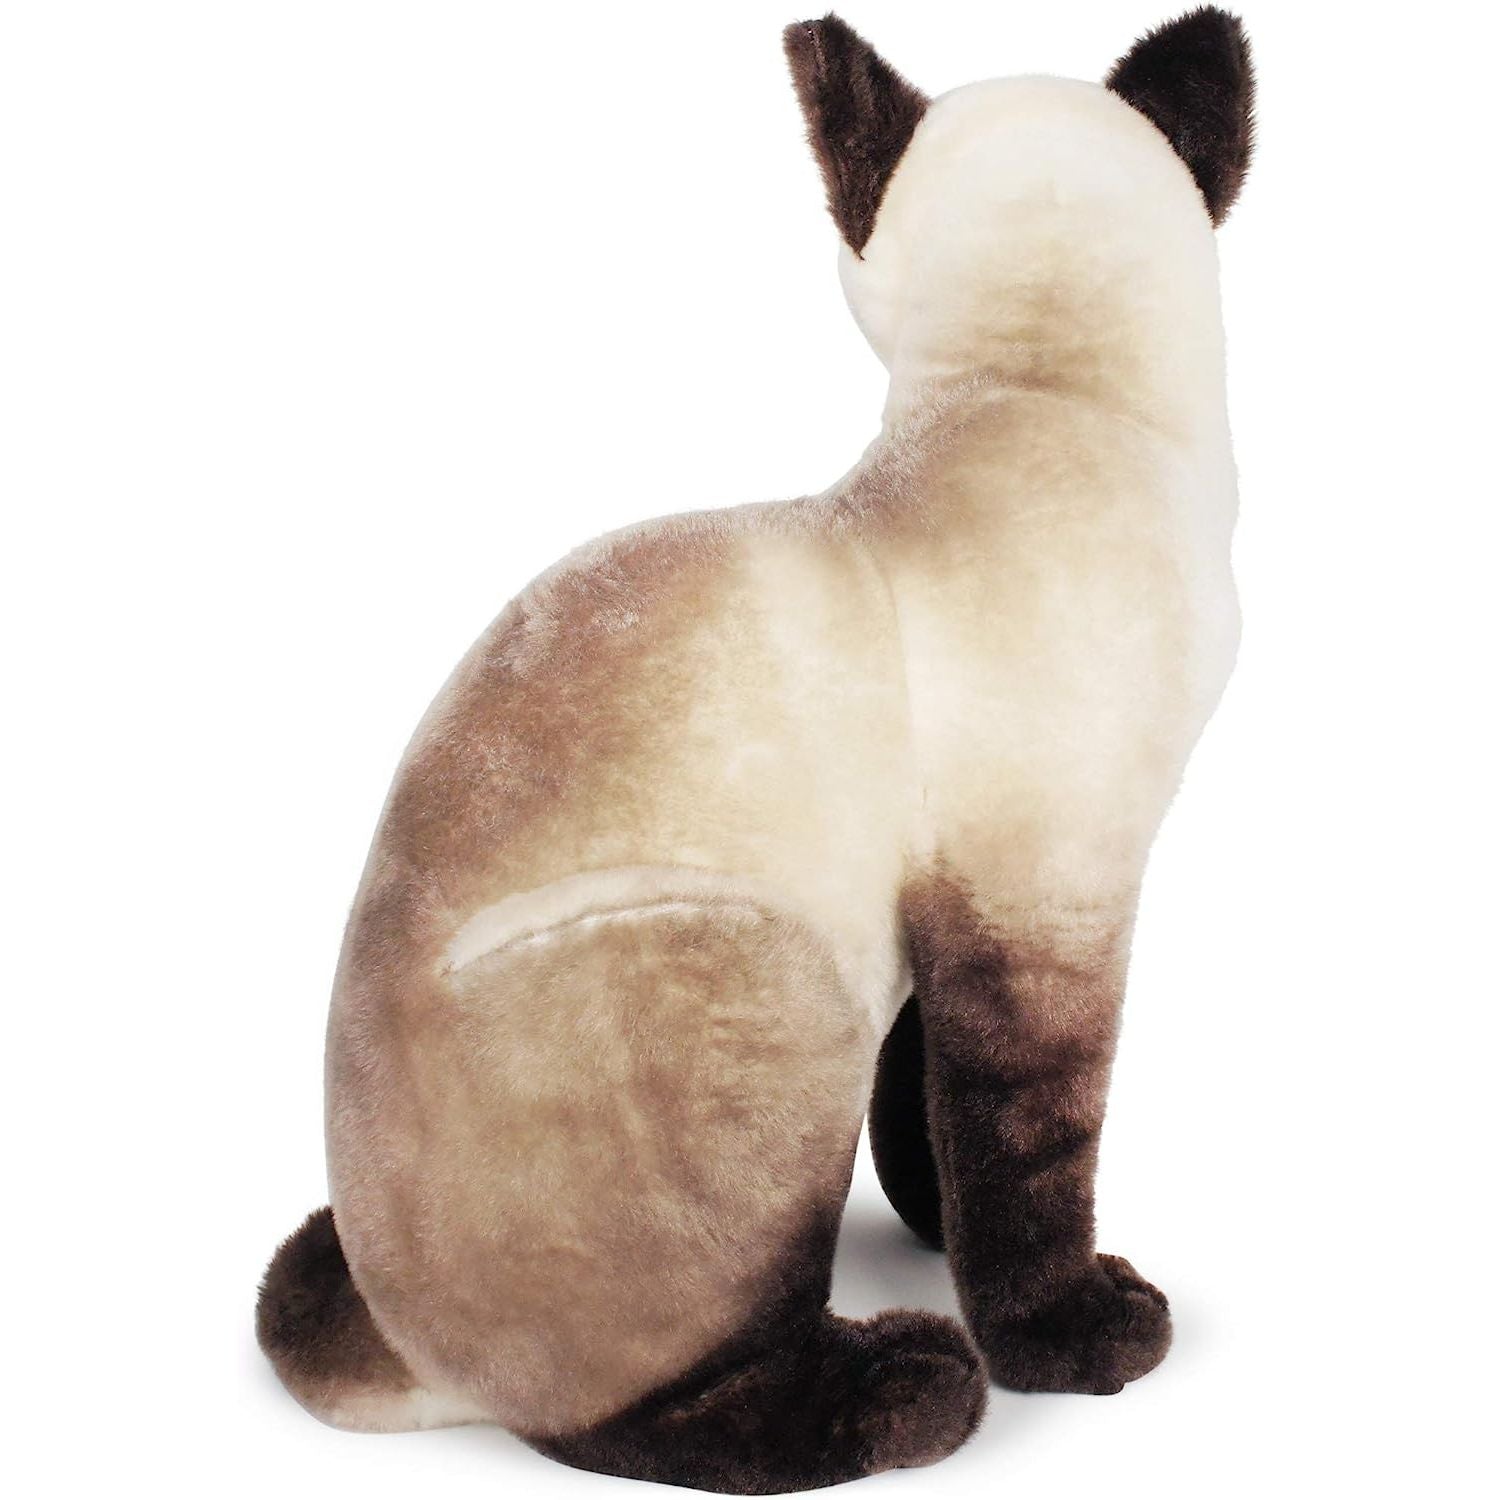 Stefan The Siamese Cat - Neo Essentials Store